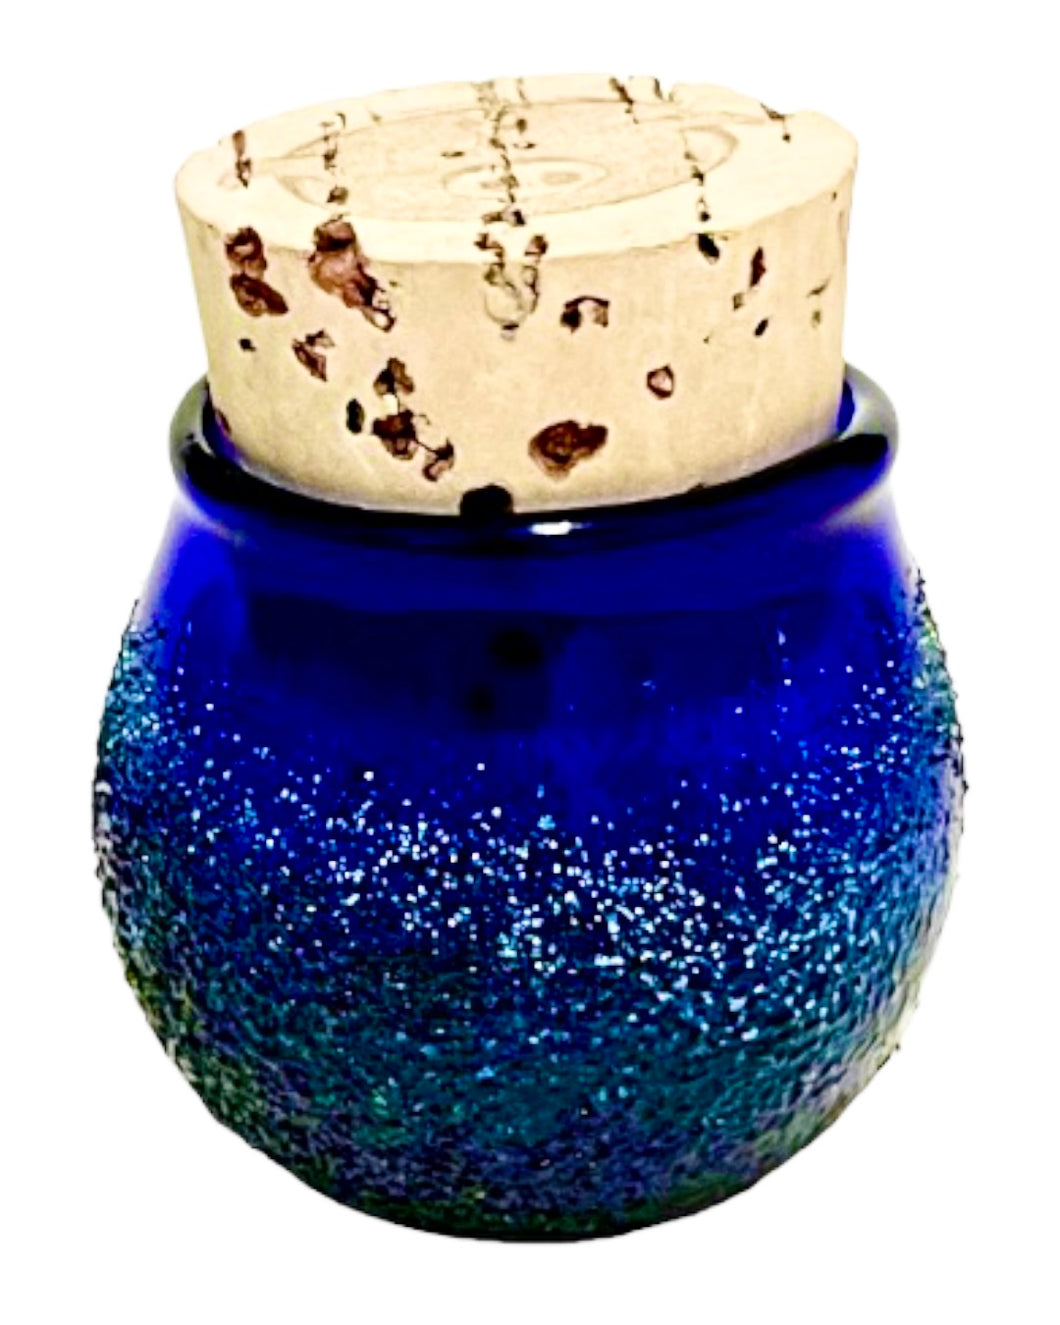 A blue Small Corked Stash Jar.